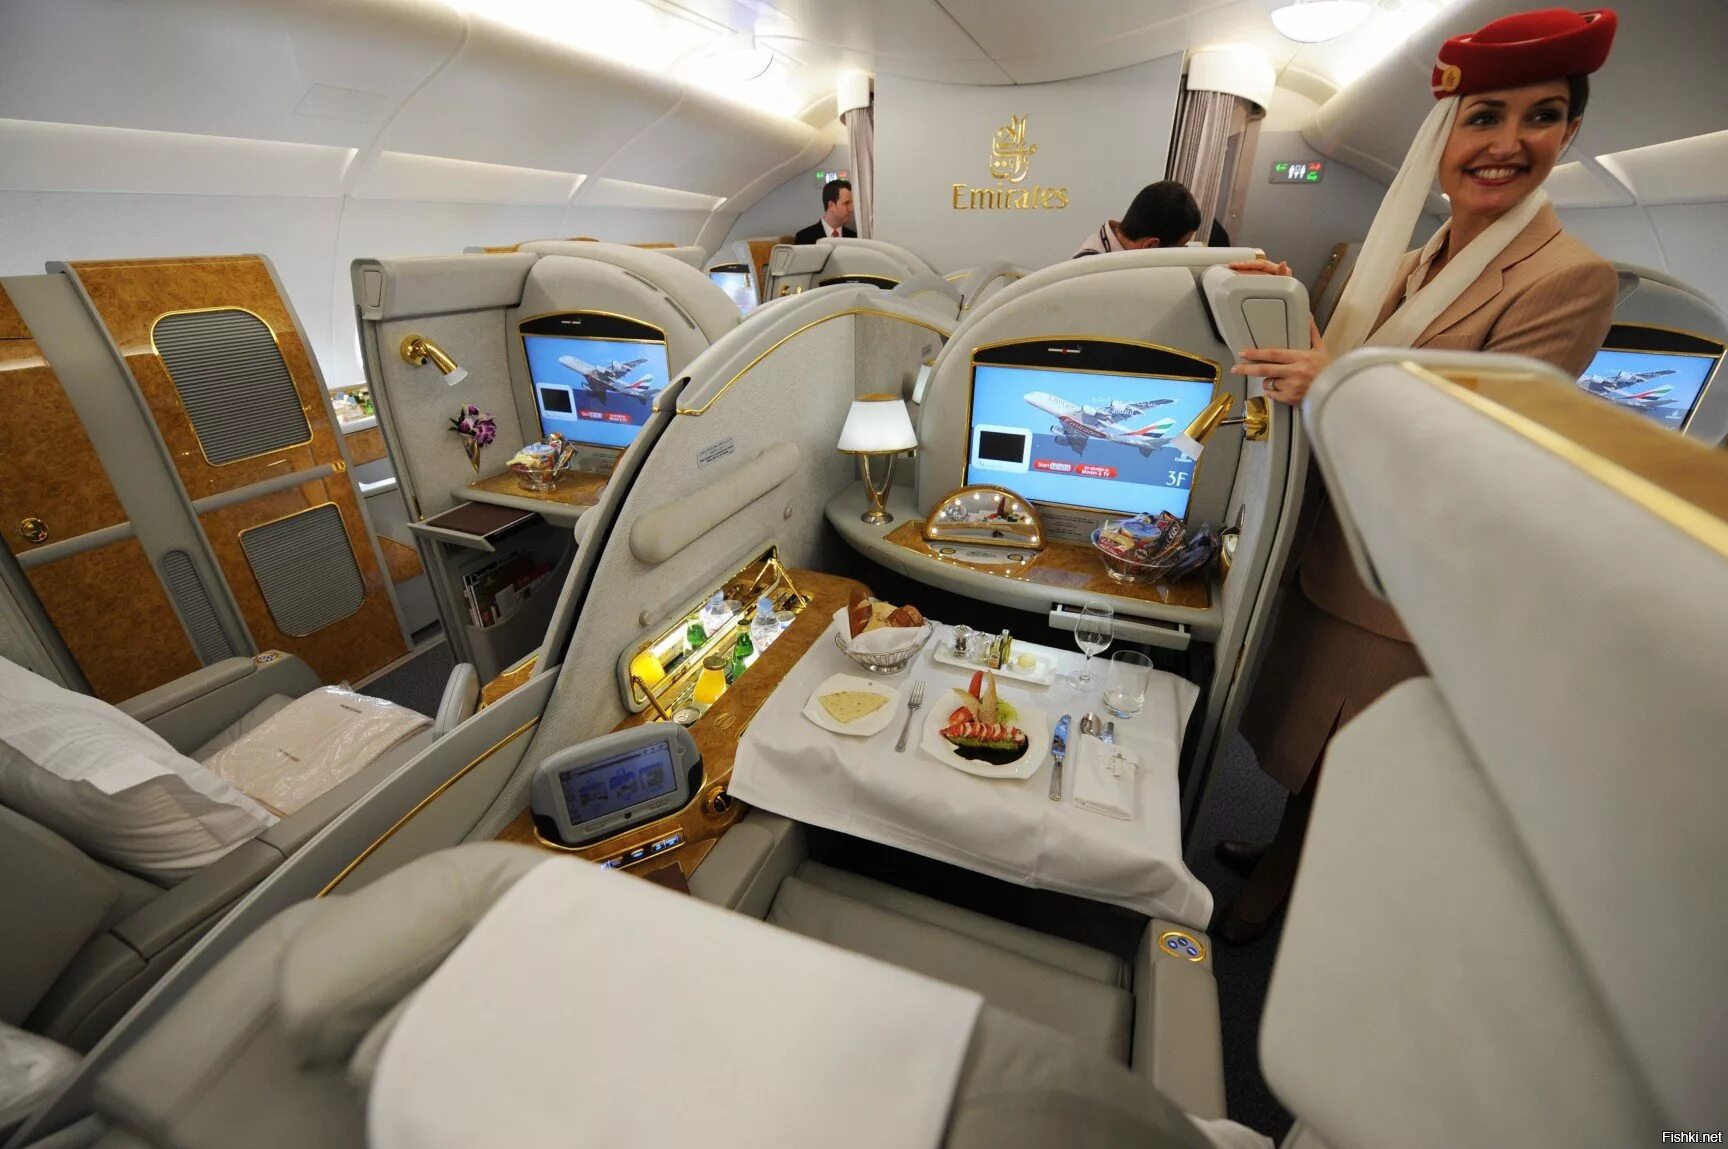 Airbus a380 Emirates бизнес класс. Airbus a380 Emirates первый класс. Самолёт Airbus a380 Emirates салон. Первый класс Emirates Airlines a380.